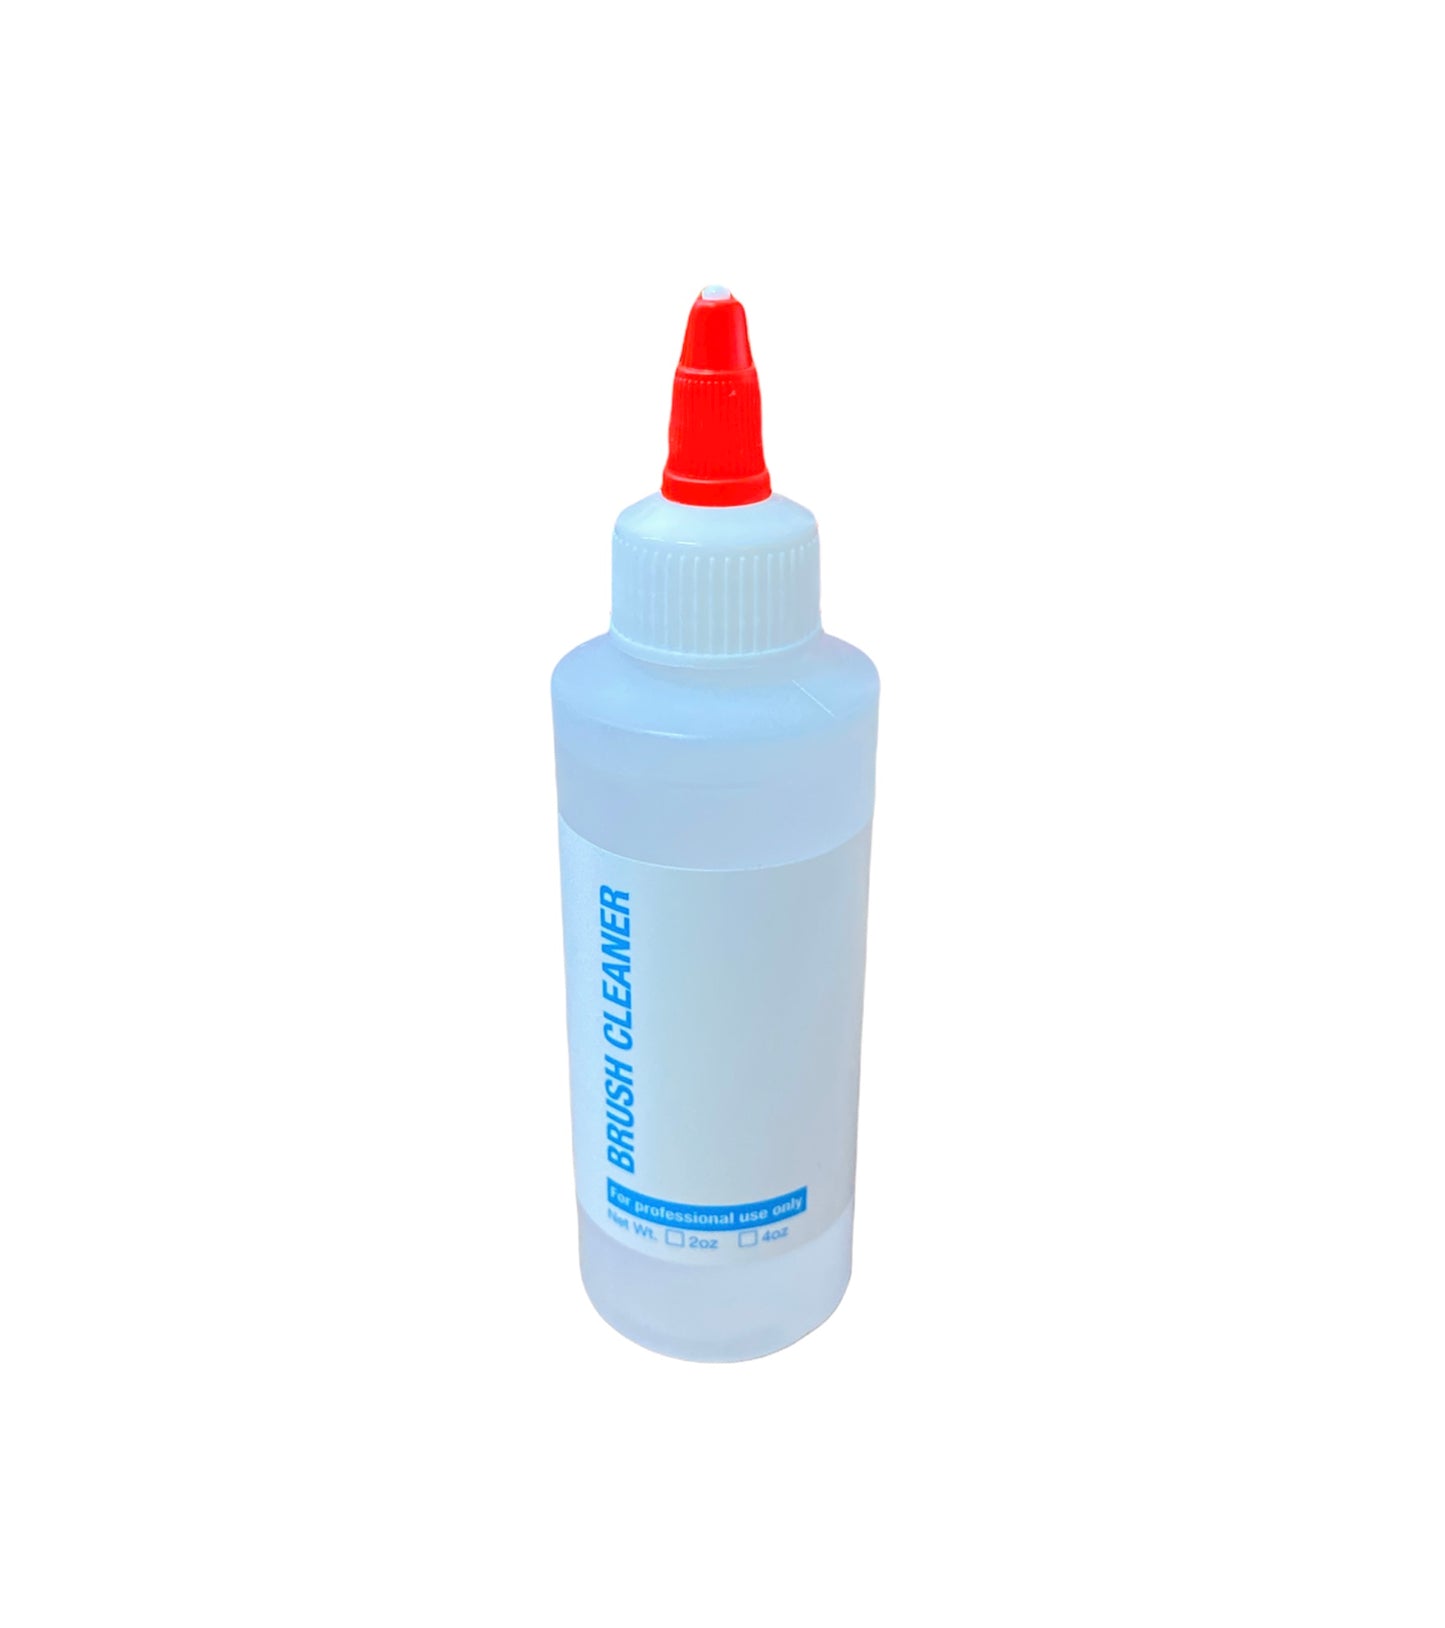 Brush Cleaner for Acrylic Brush - #470199 - Premier Nail Supply 